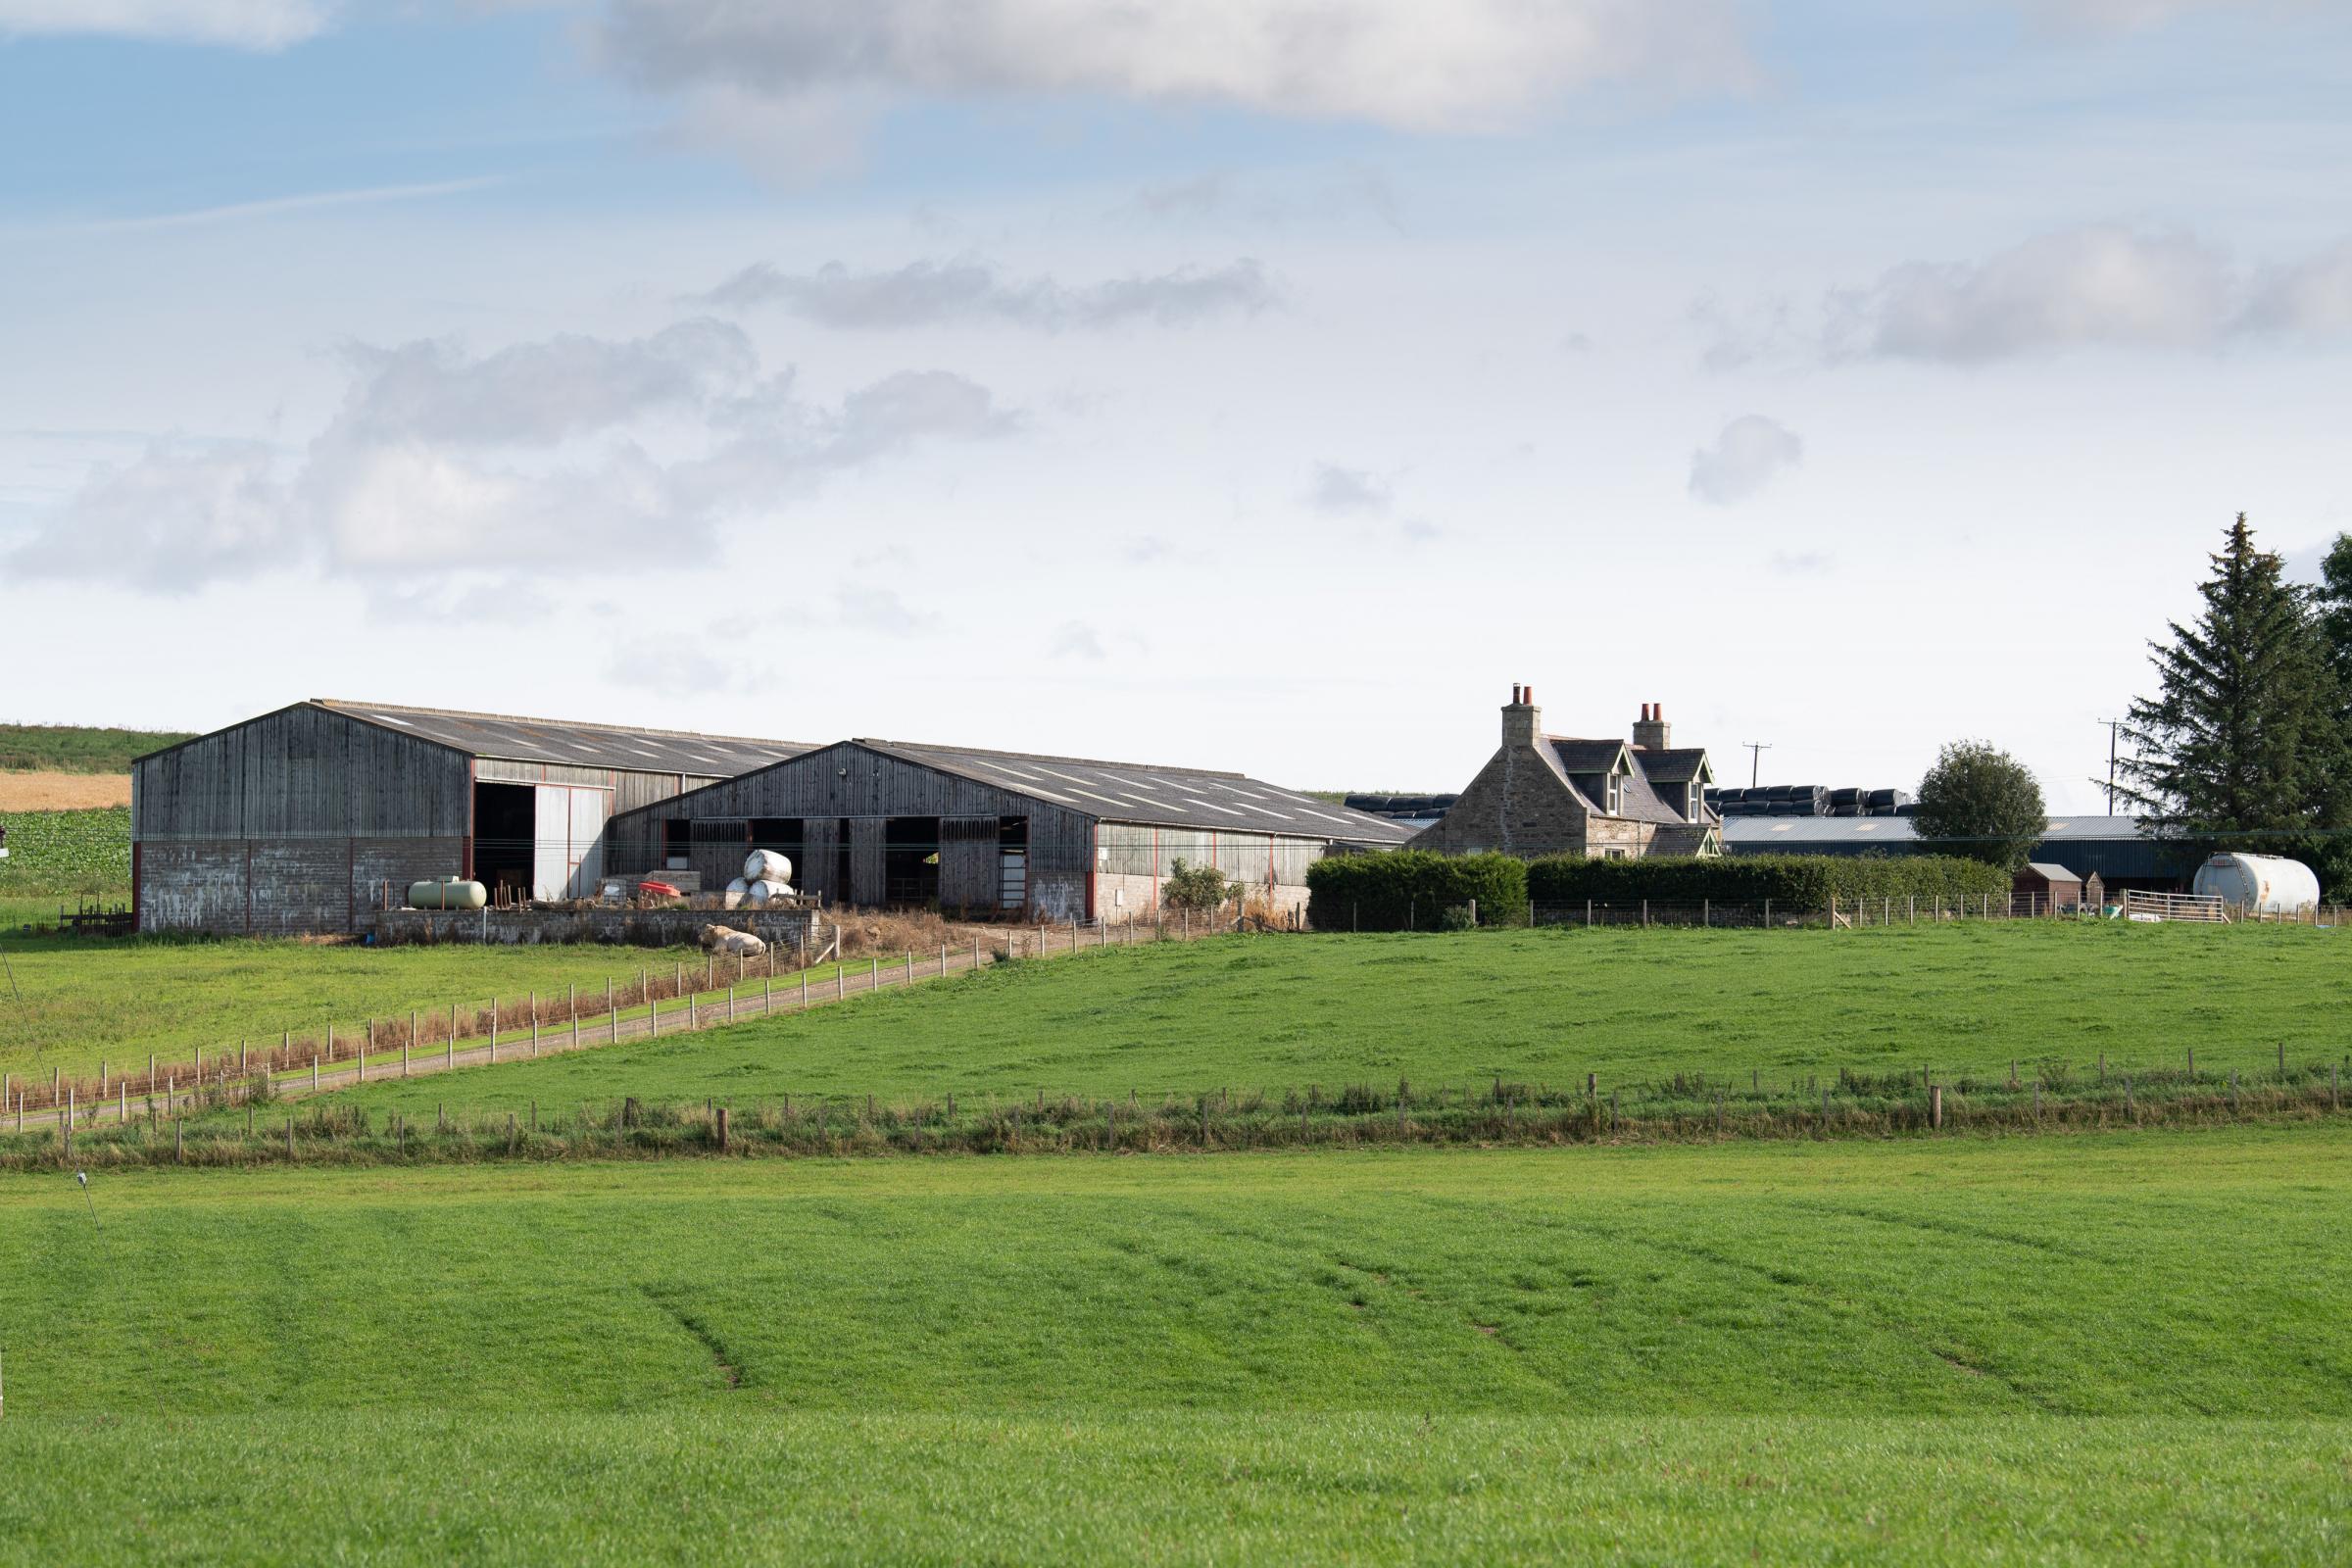 West Cruichie near Huntly, Aberdeenshire Ref:RH060921096 Rob Haining / The Scottish Farmer...